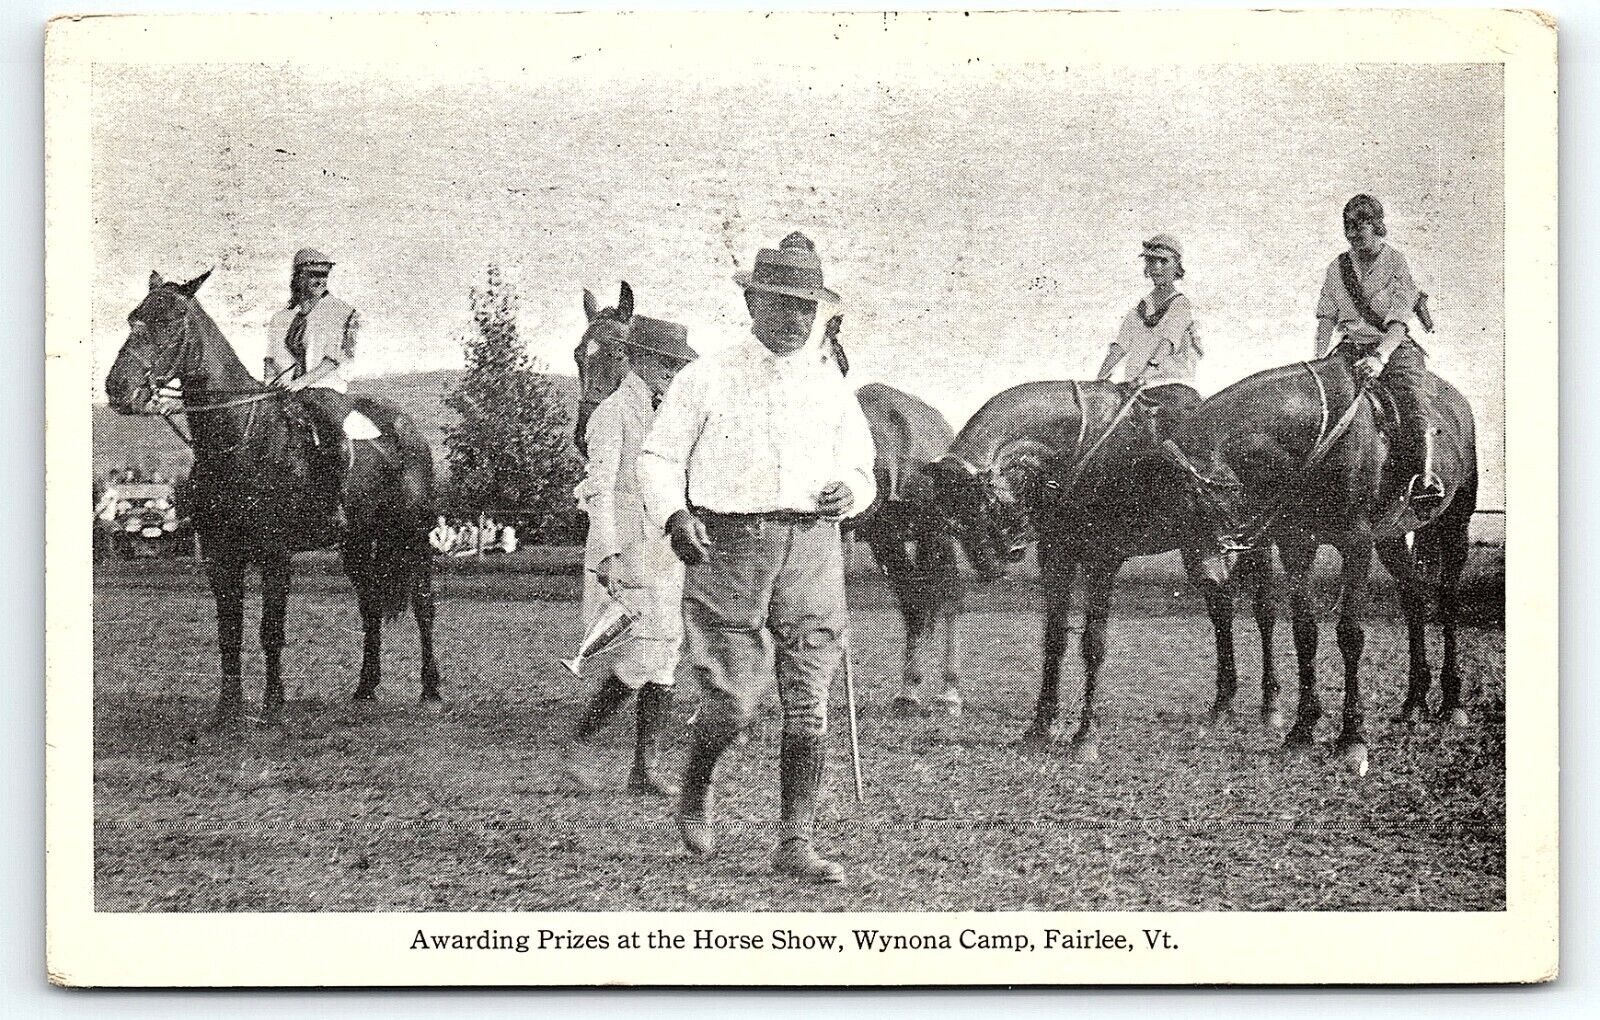 c1910 FAIRLEE VERMONT WYNONA CAMP AWARDING PRIZES HORSE SHOW POSTCARD  P3607